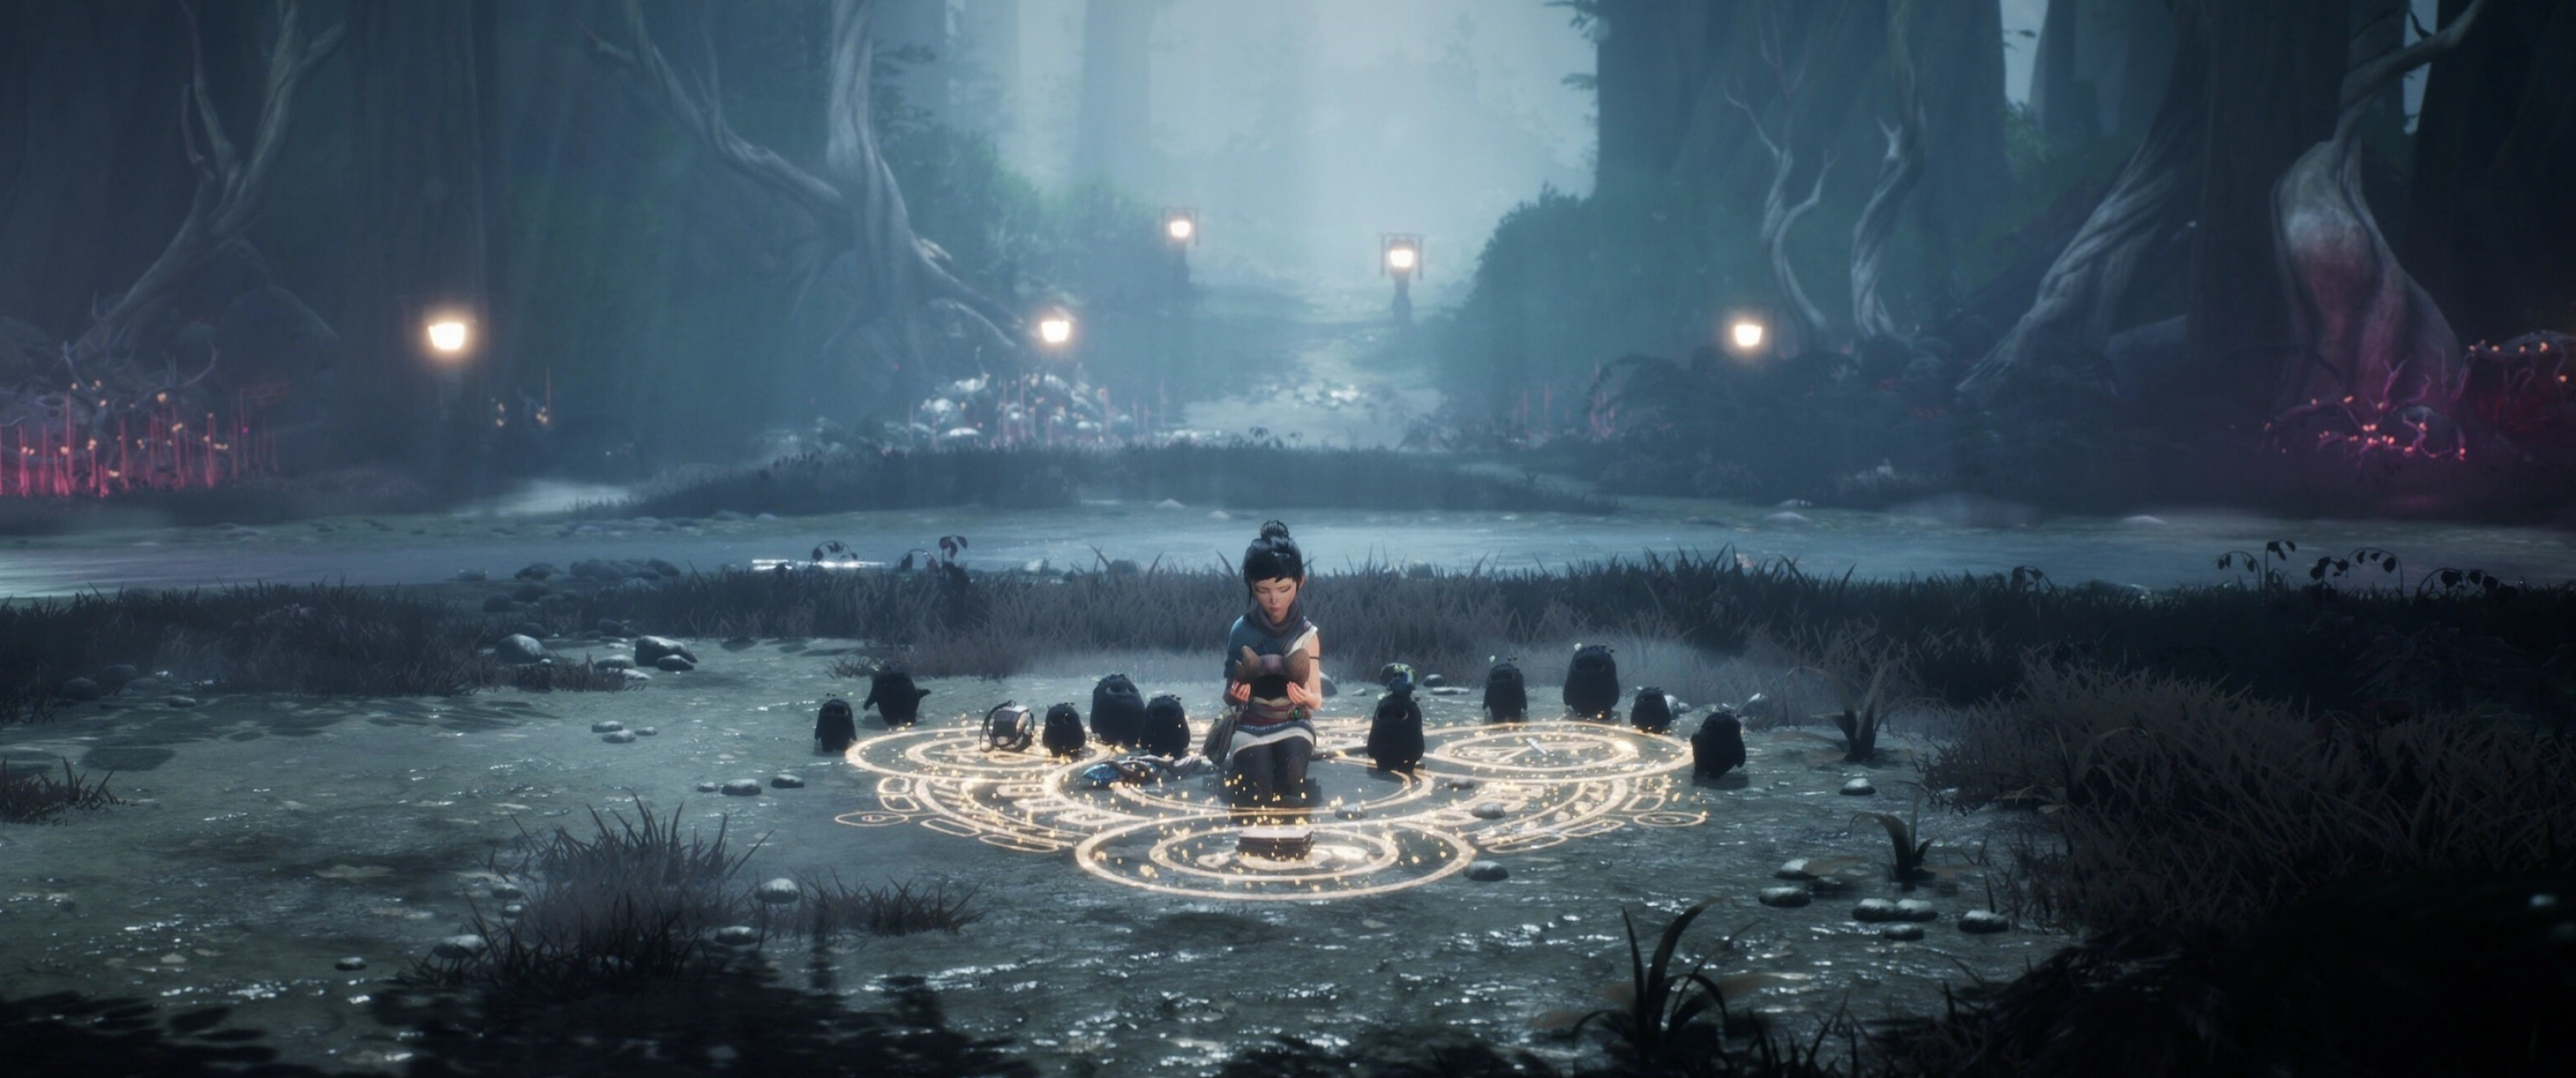 Kena: Bridge of Spirits: The game was showcased at the 2021 Tribeca Film Festival. 3440x1440 Dual Screen Wallpaper.